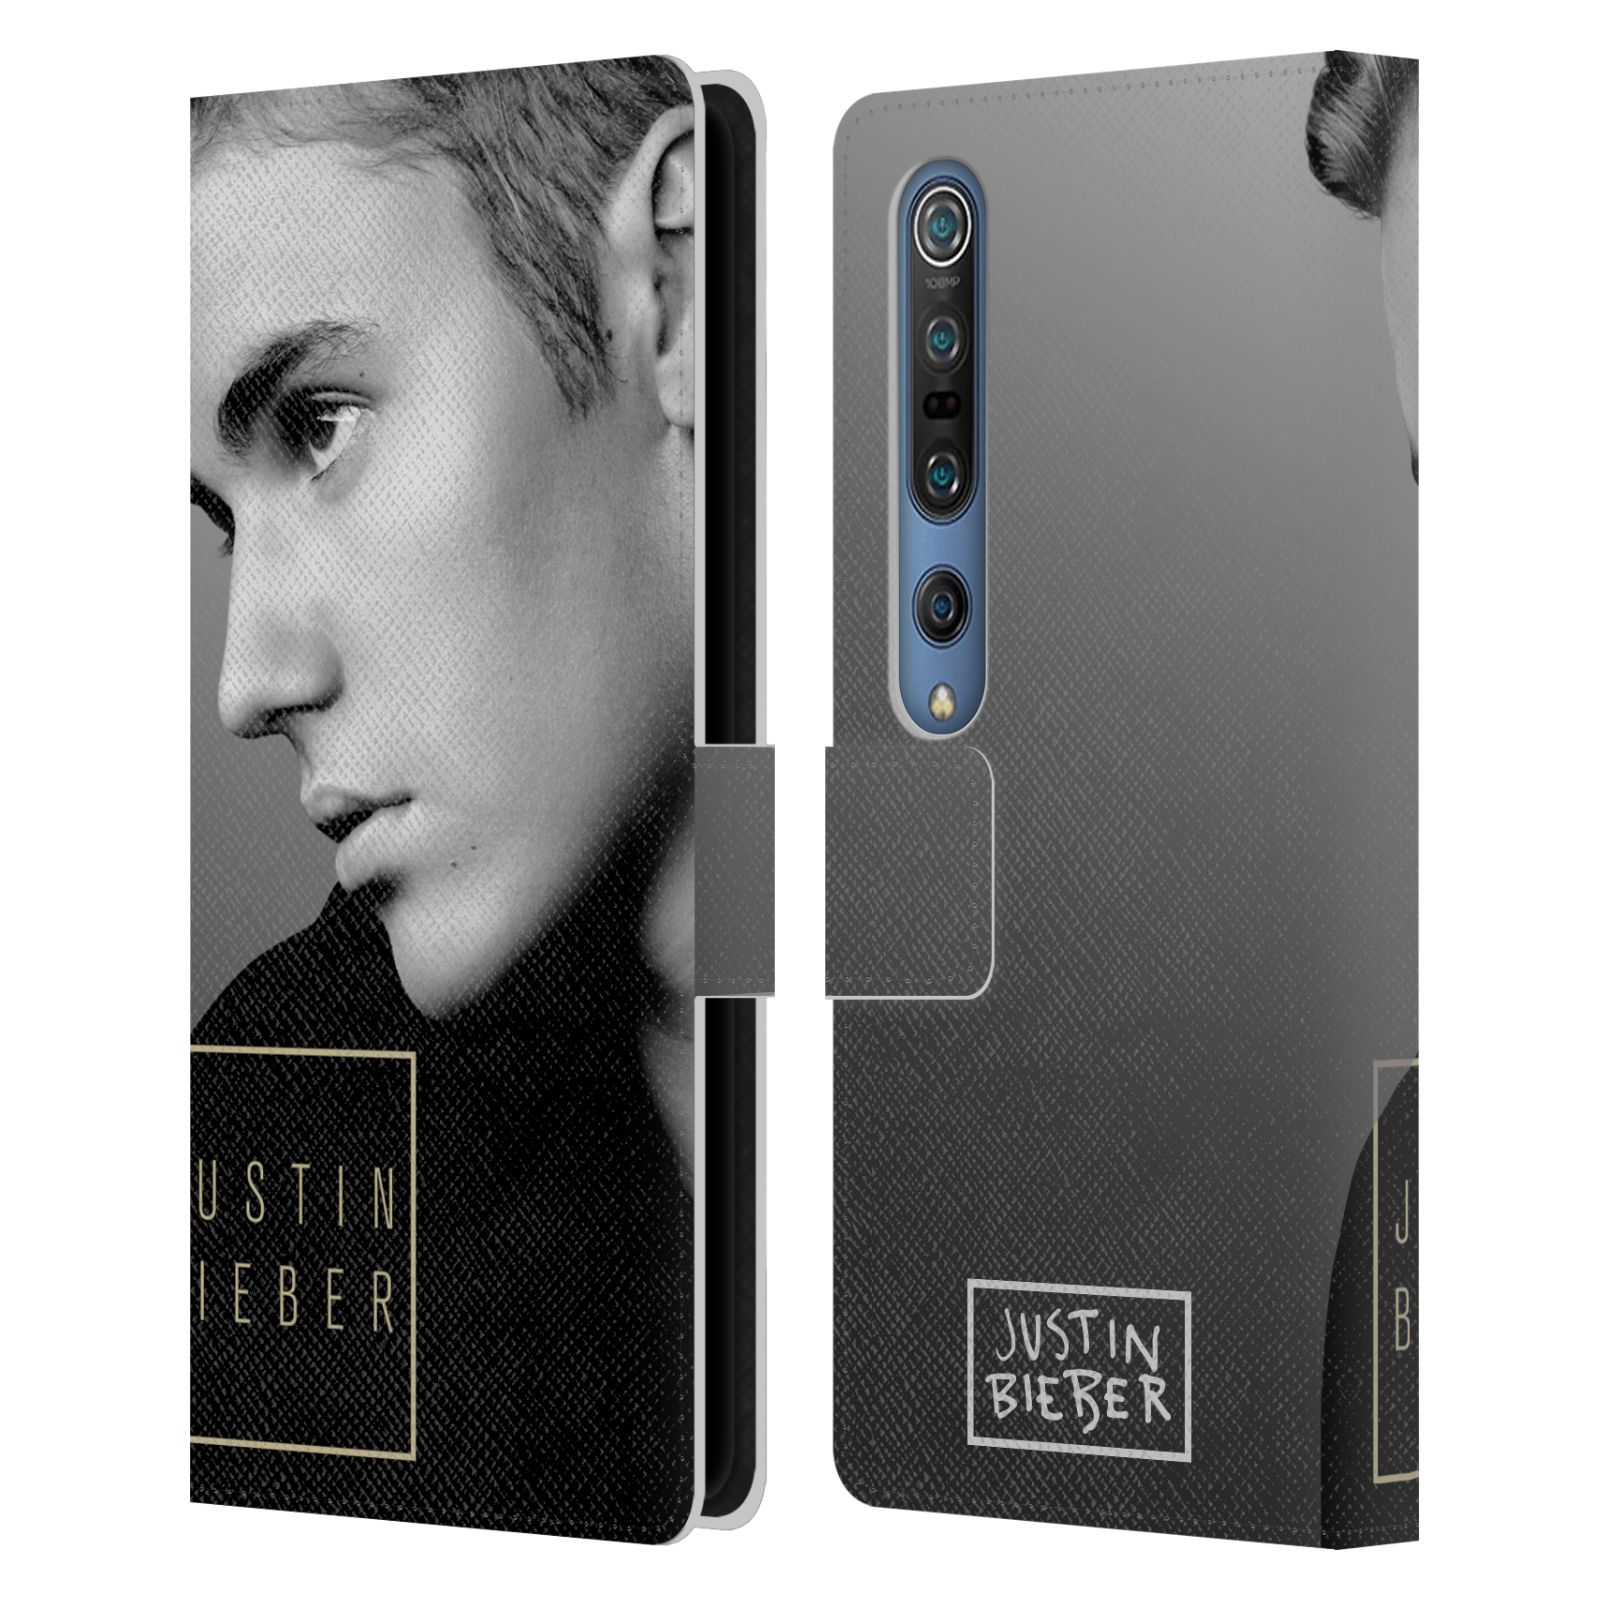 Pouzdro HEAD CASE na mobil Xiaomi Mi 10 / Mi 10 PRO  Justin Bieber - černobílé zrcadlo